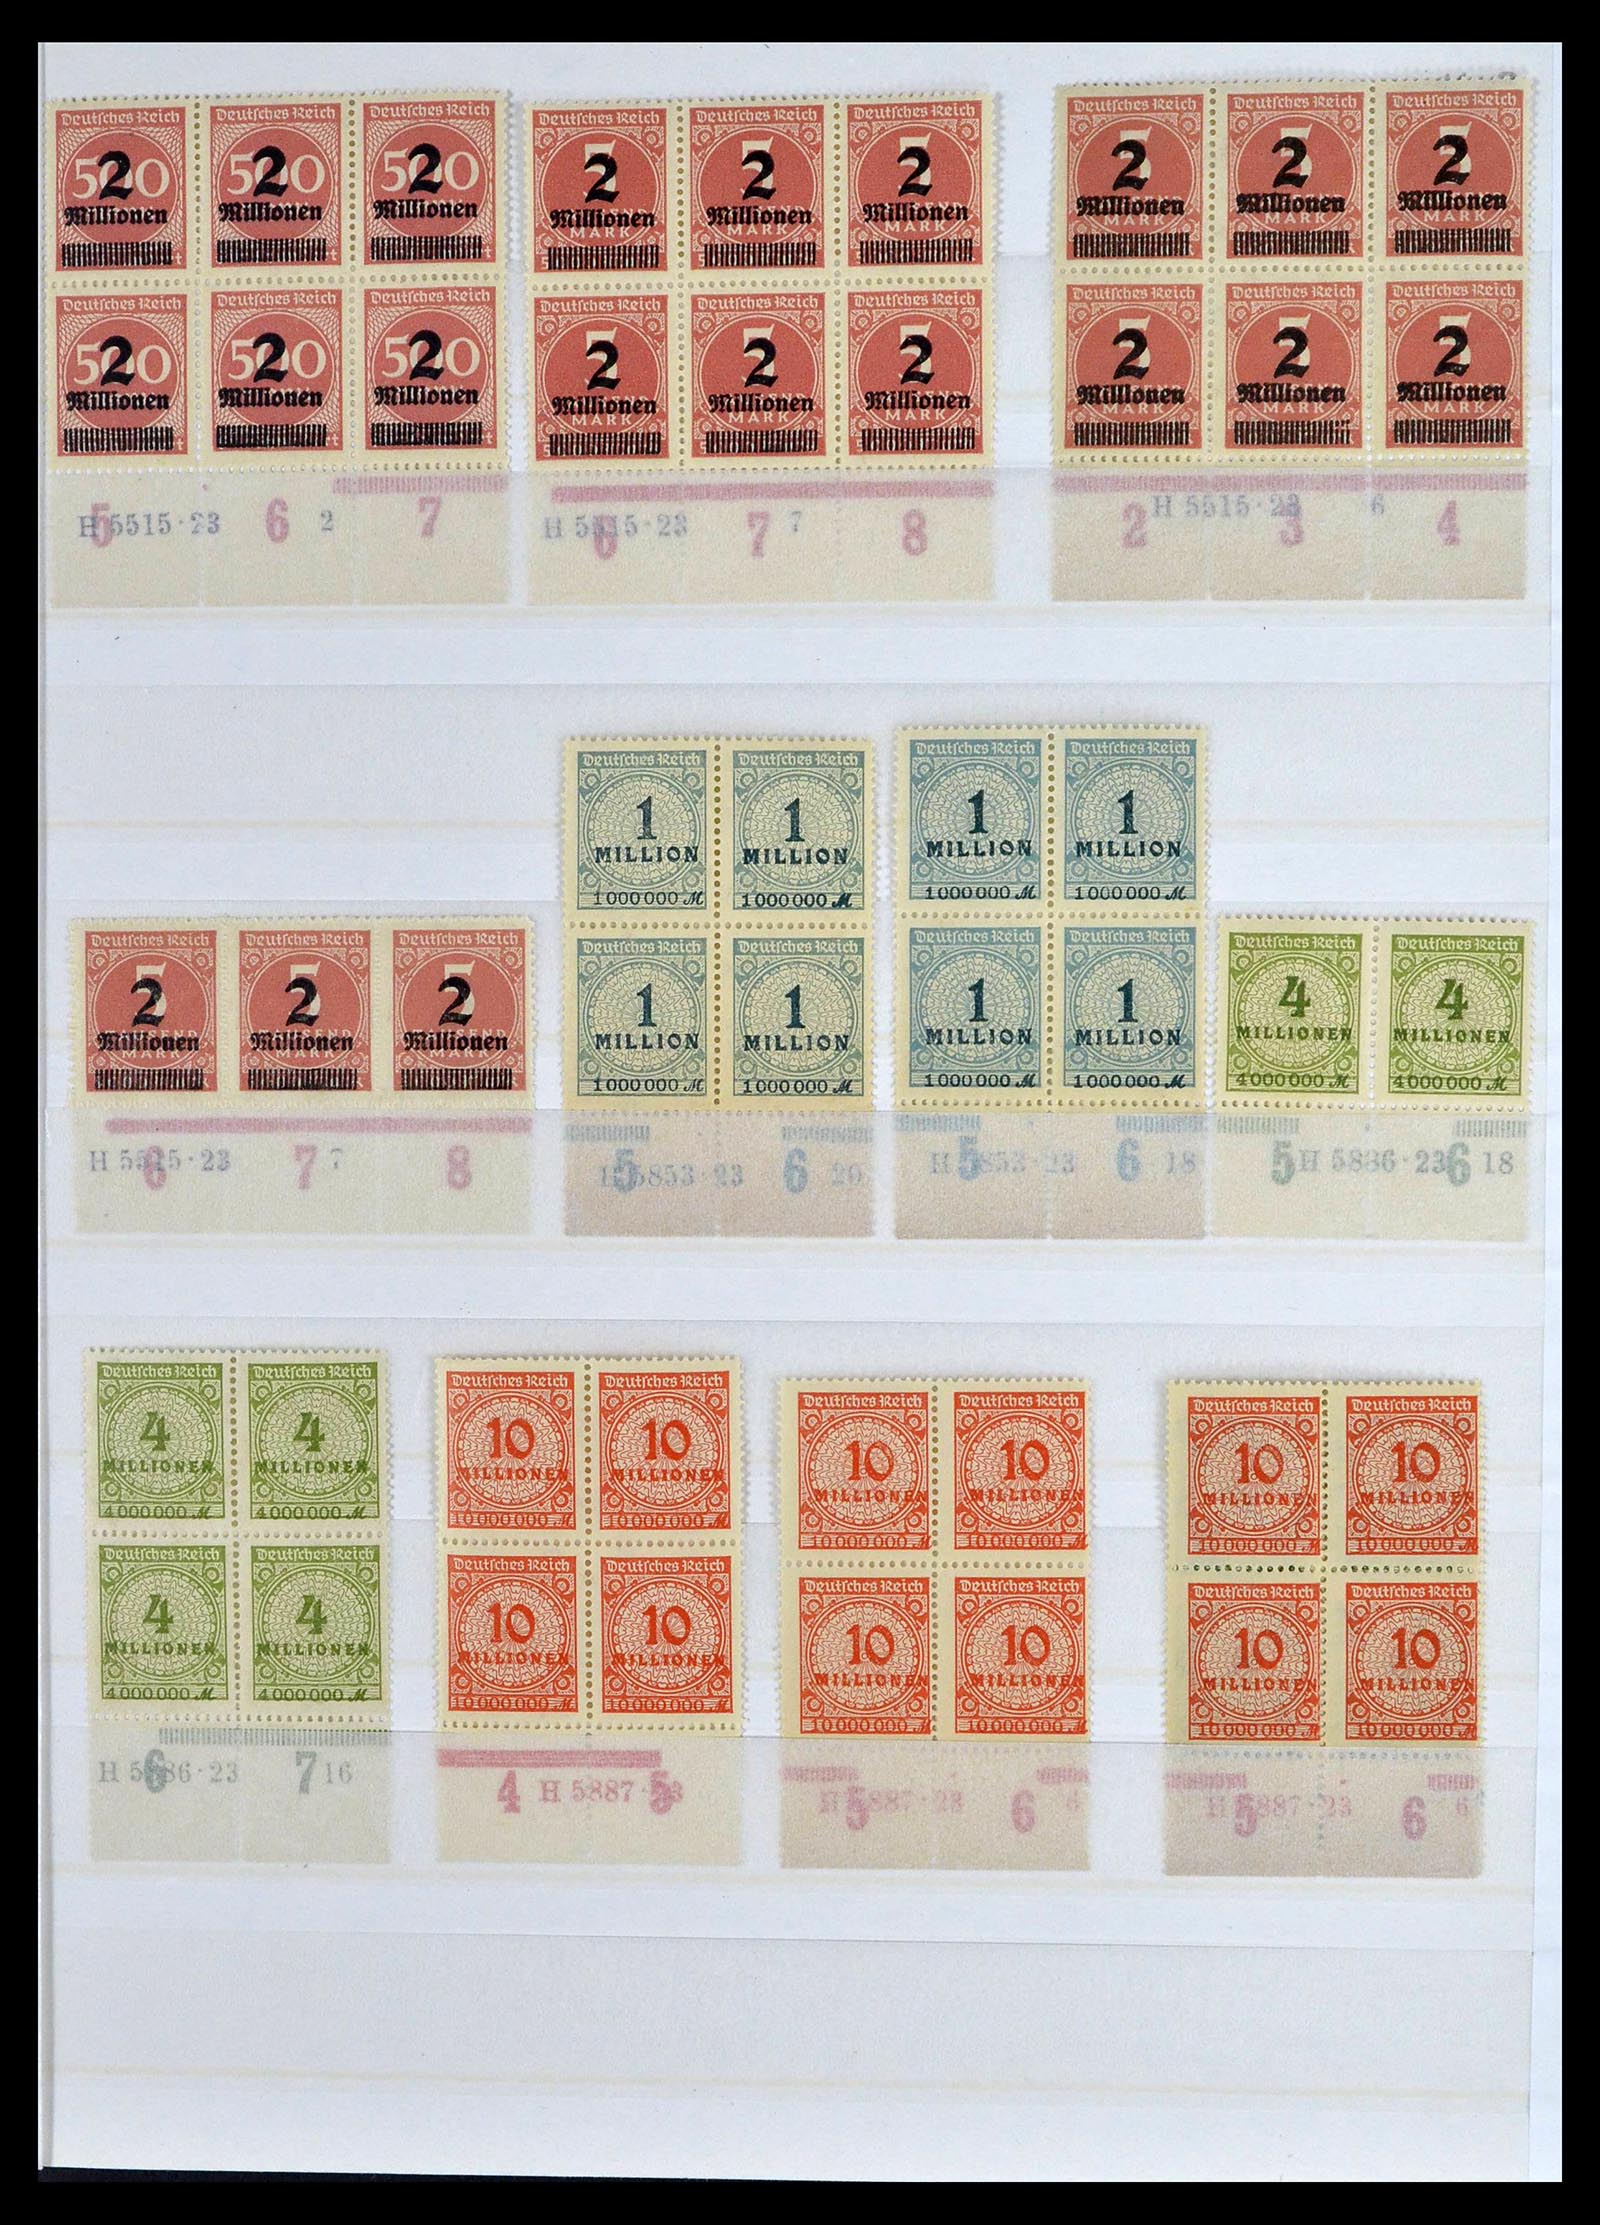 39254 0085 - Stamp collection 39254 German Reich MNH top margins.